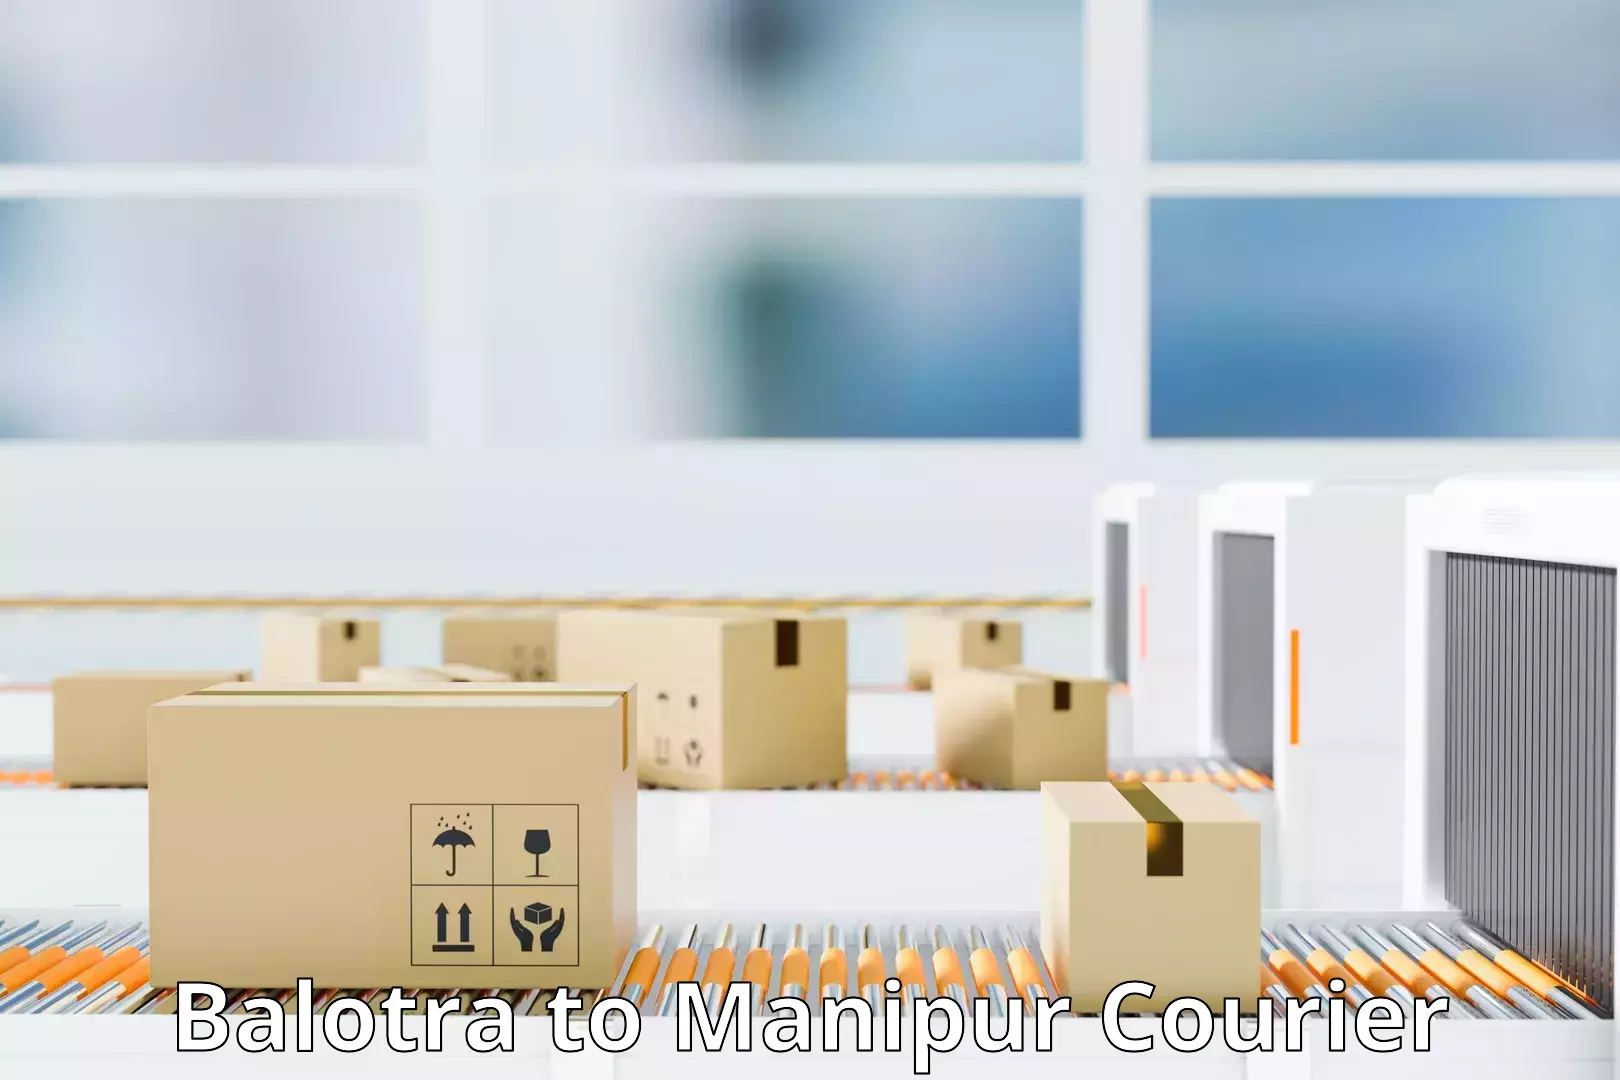 High-performance logistics Balotra to Manipur